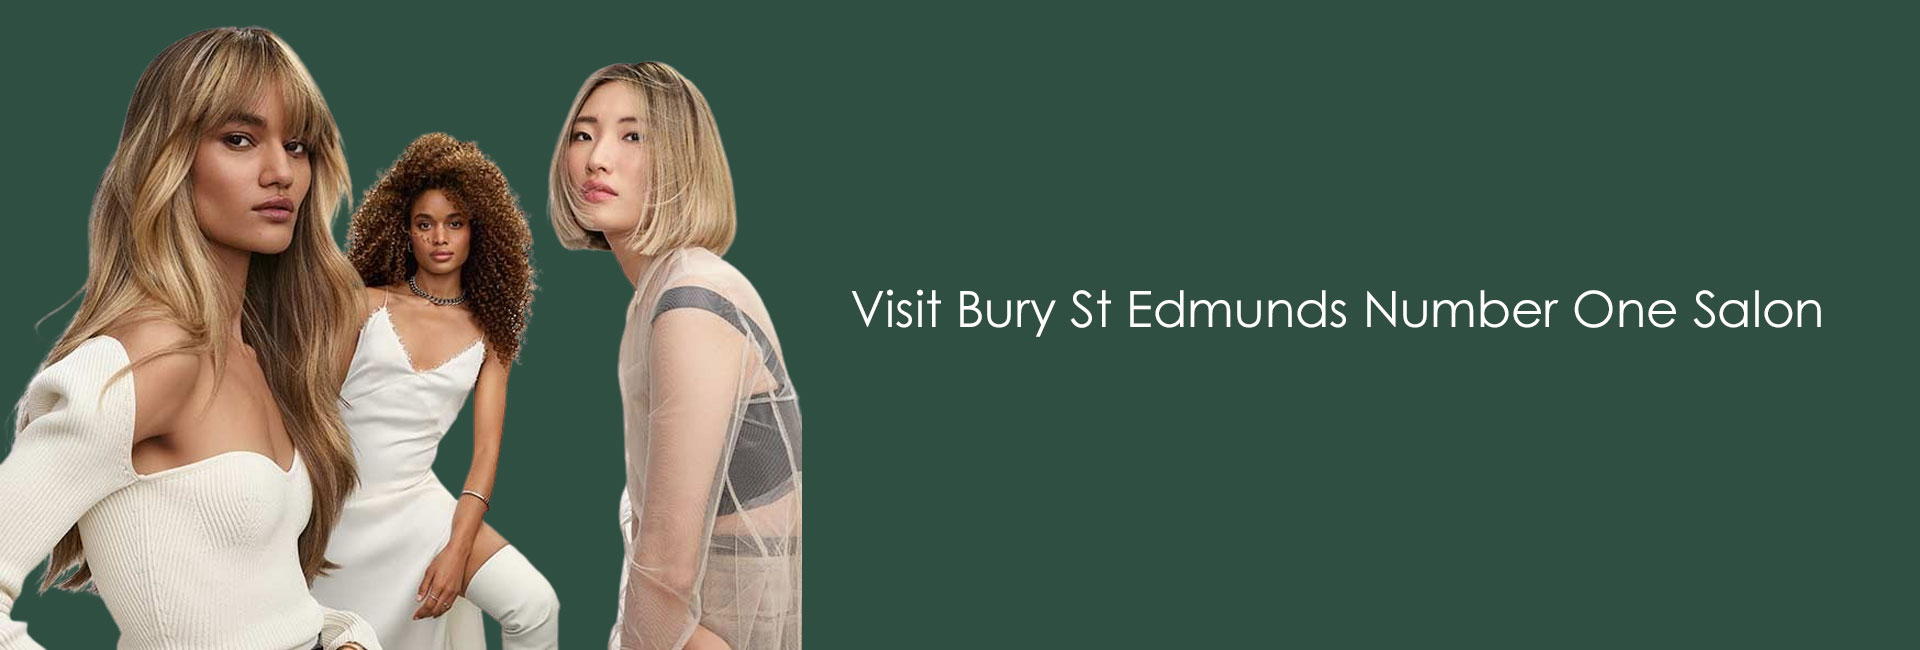 Visit Bury St Edmunds Number One Salon, Gavin Ashley 